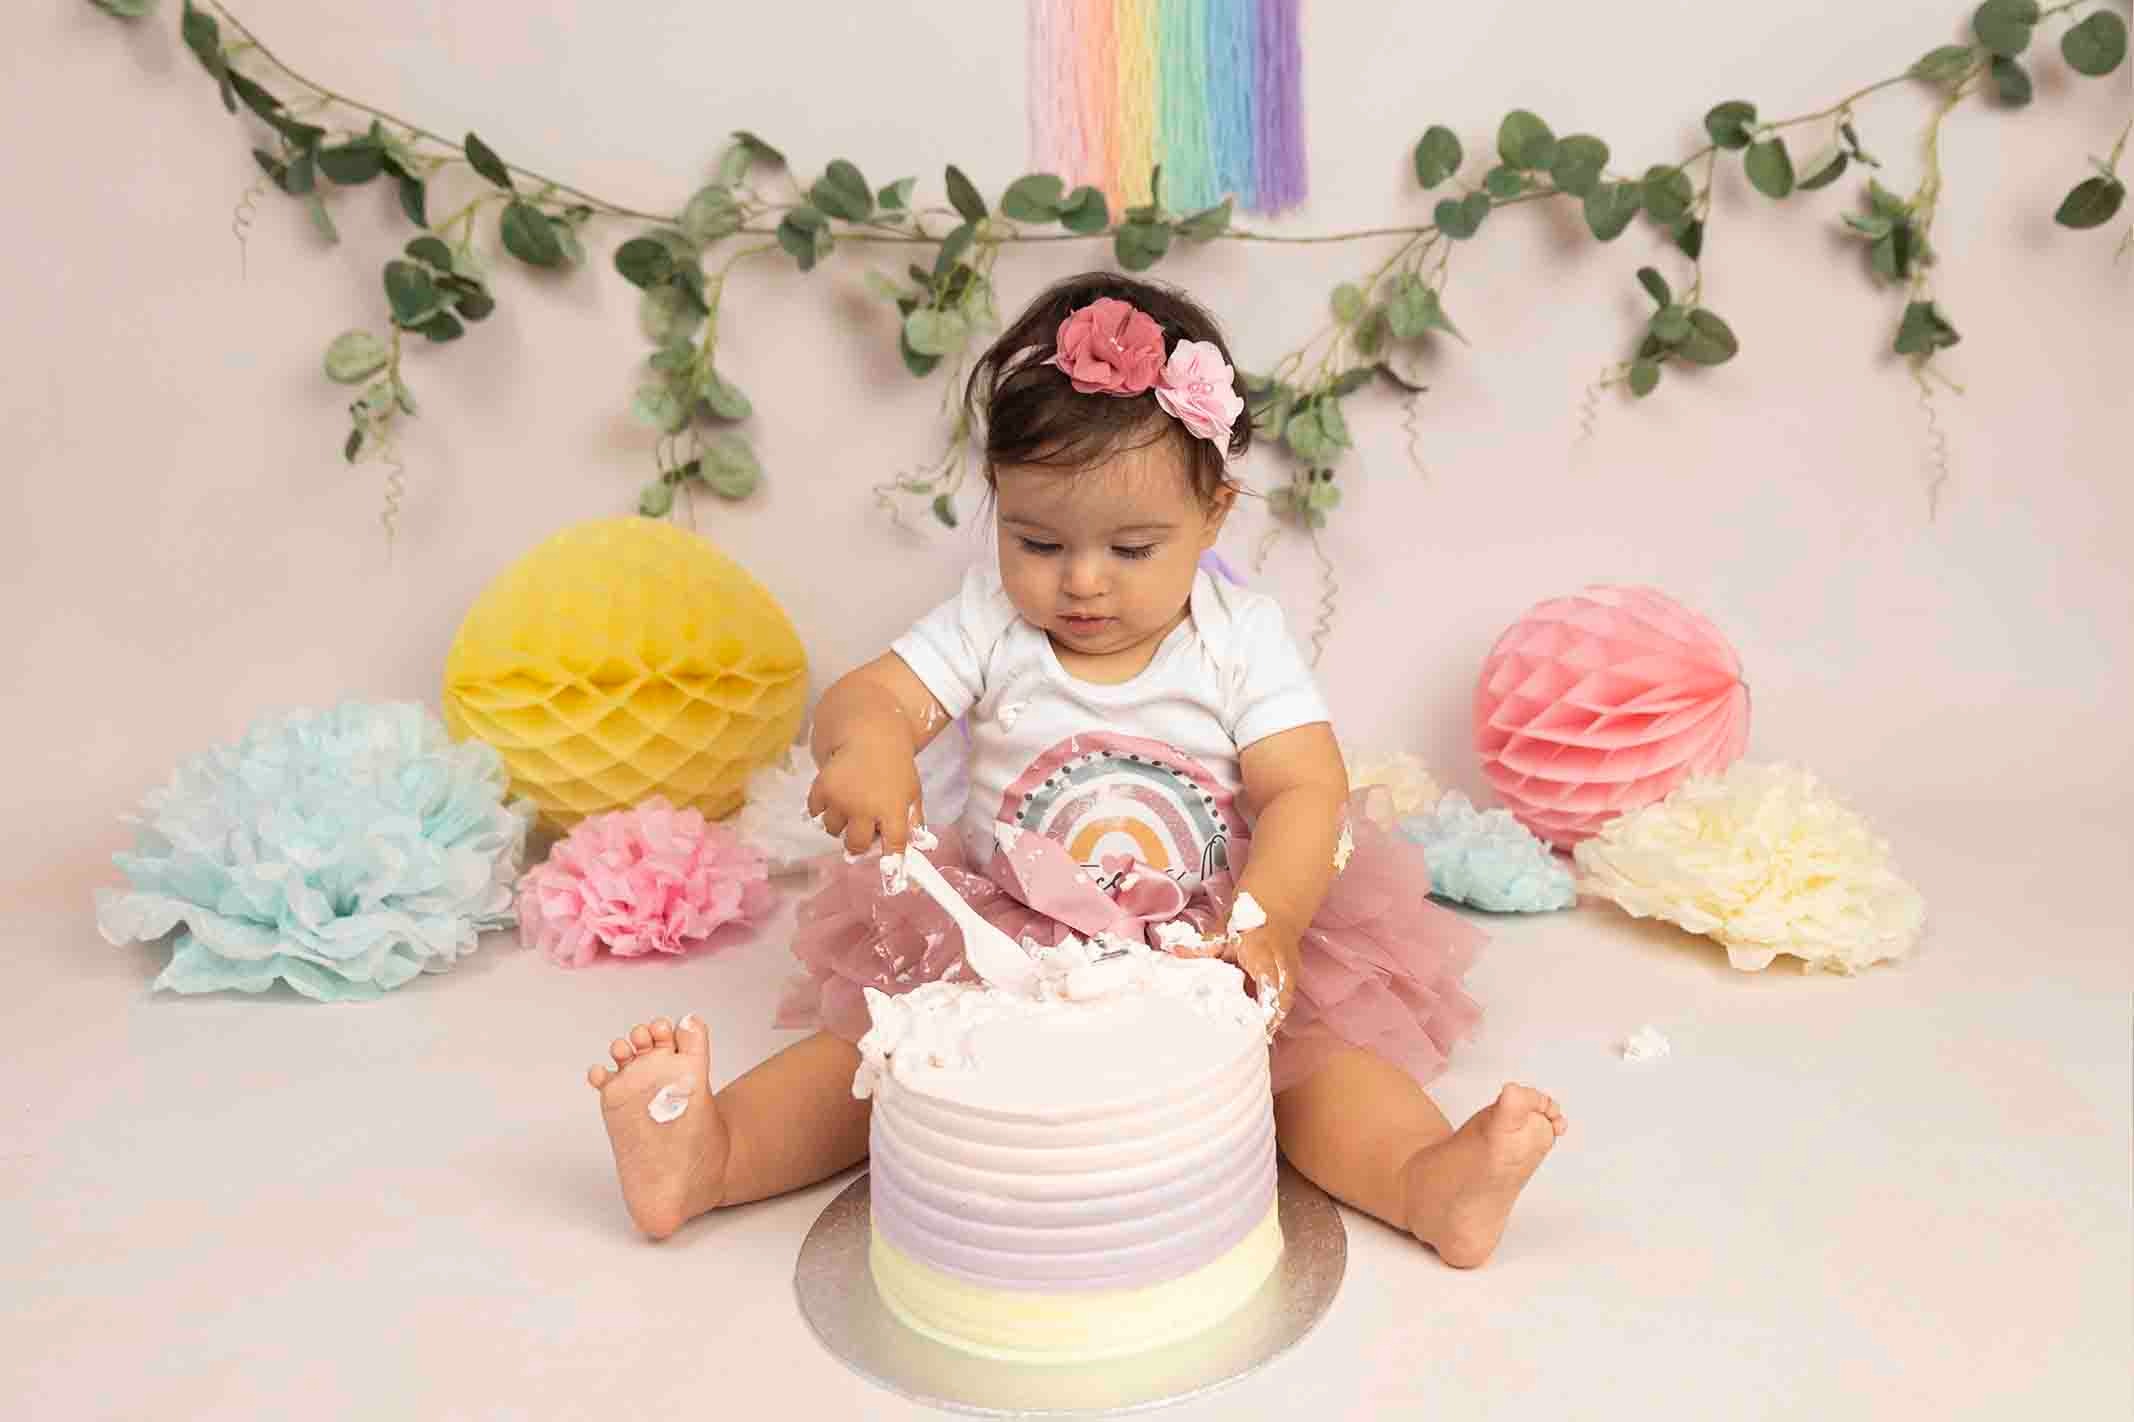 Cake smash photo shoot with baby girl